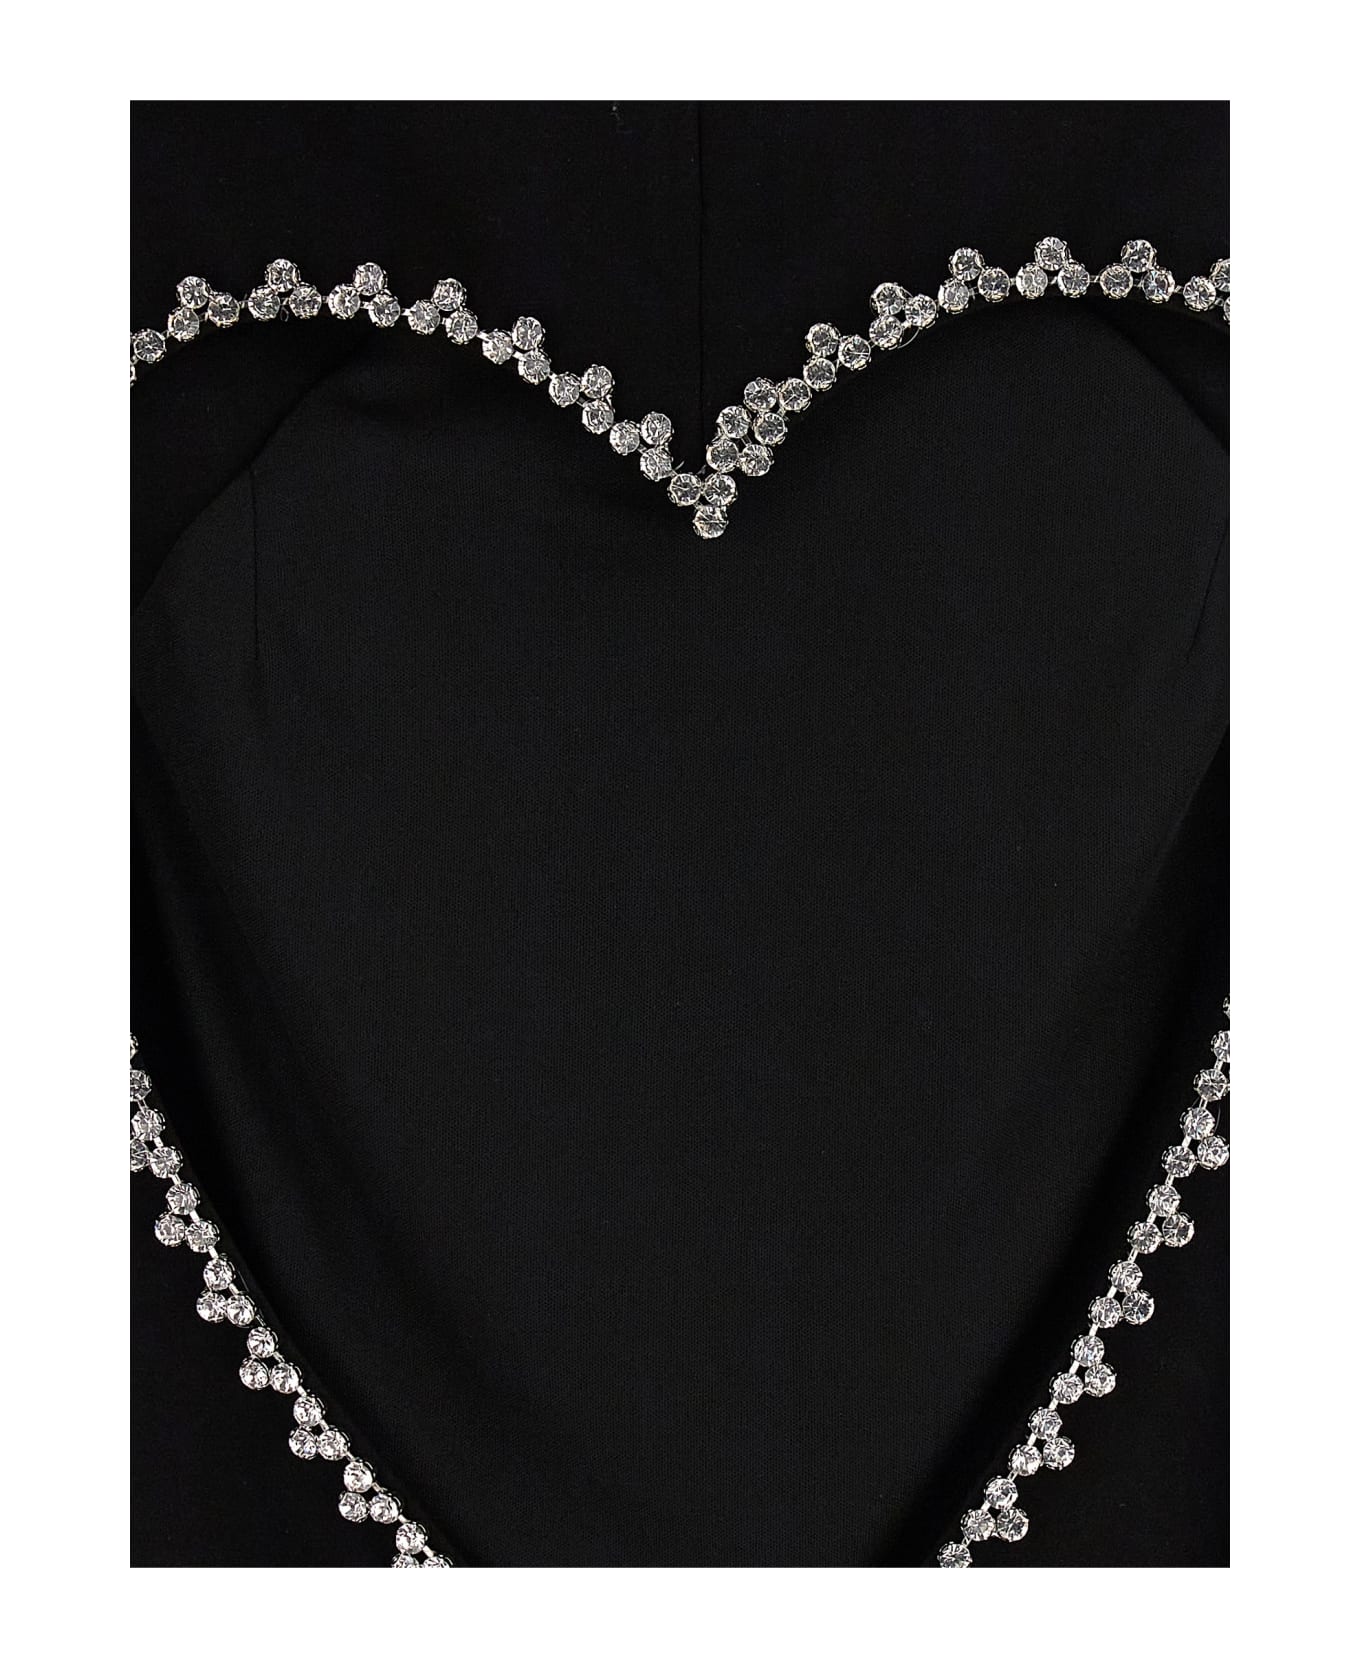 AREA 'crystal Heart Back' Dress - Black  